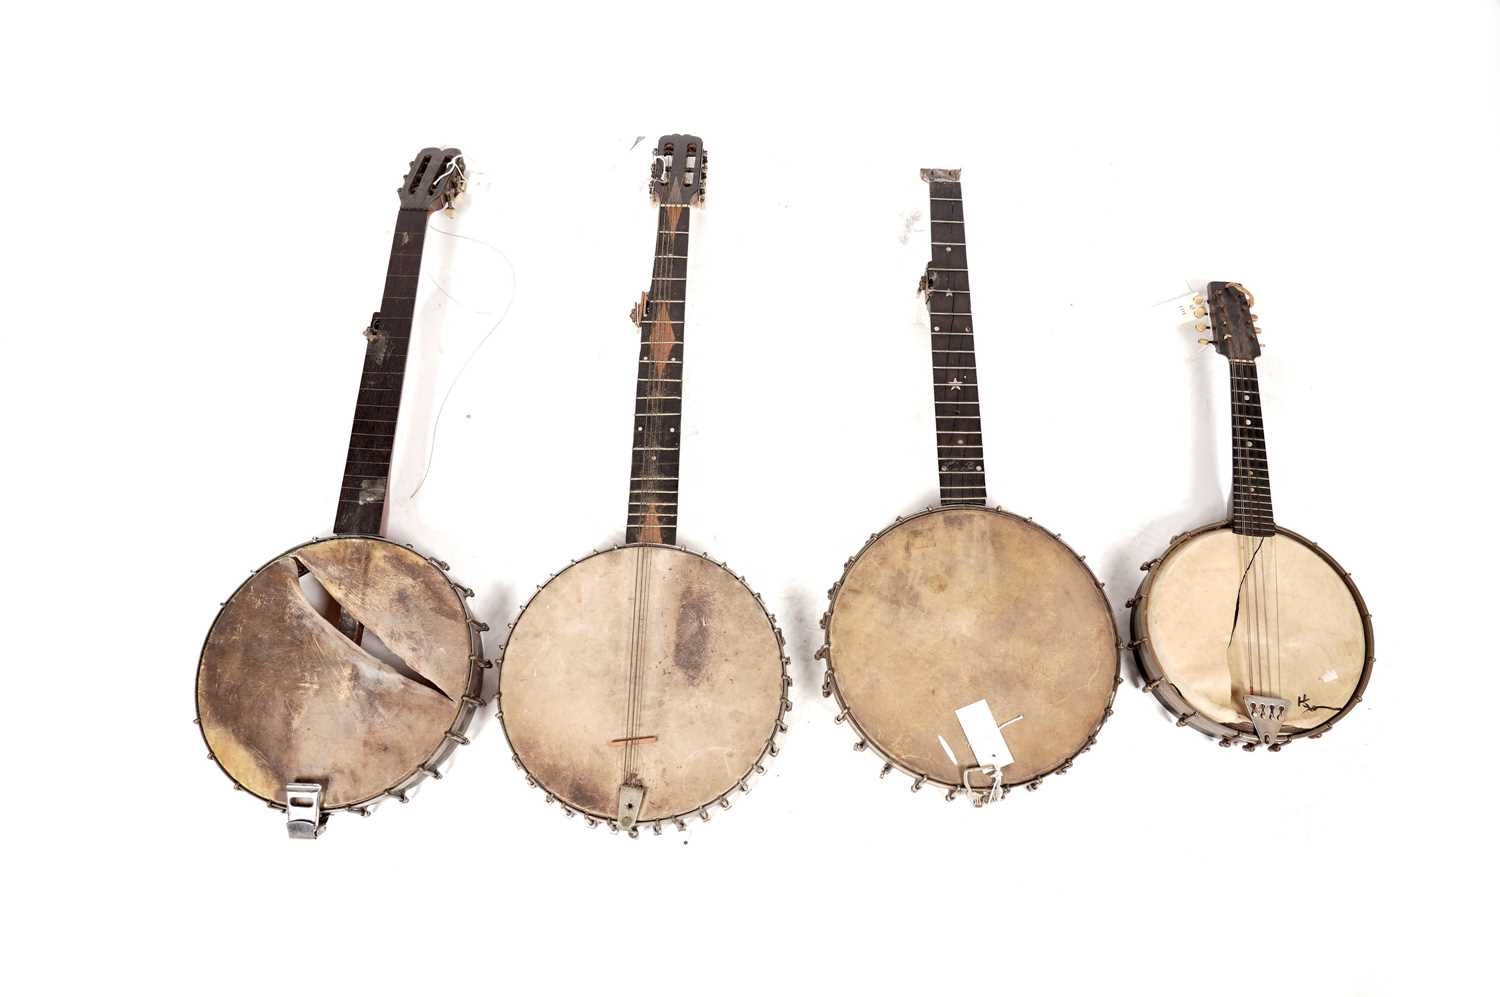 Three banjos and a Banjolele